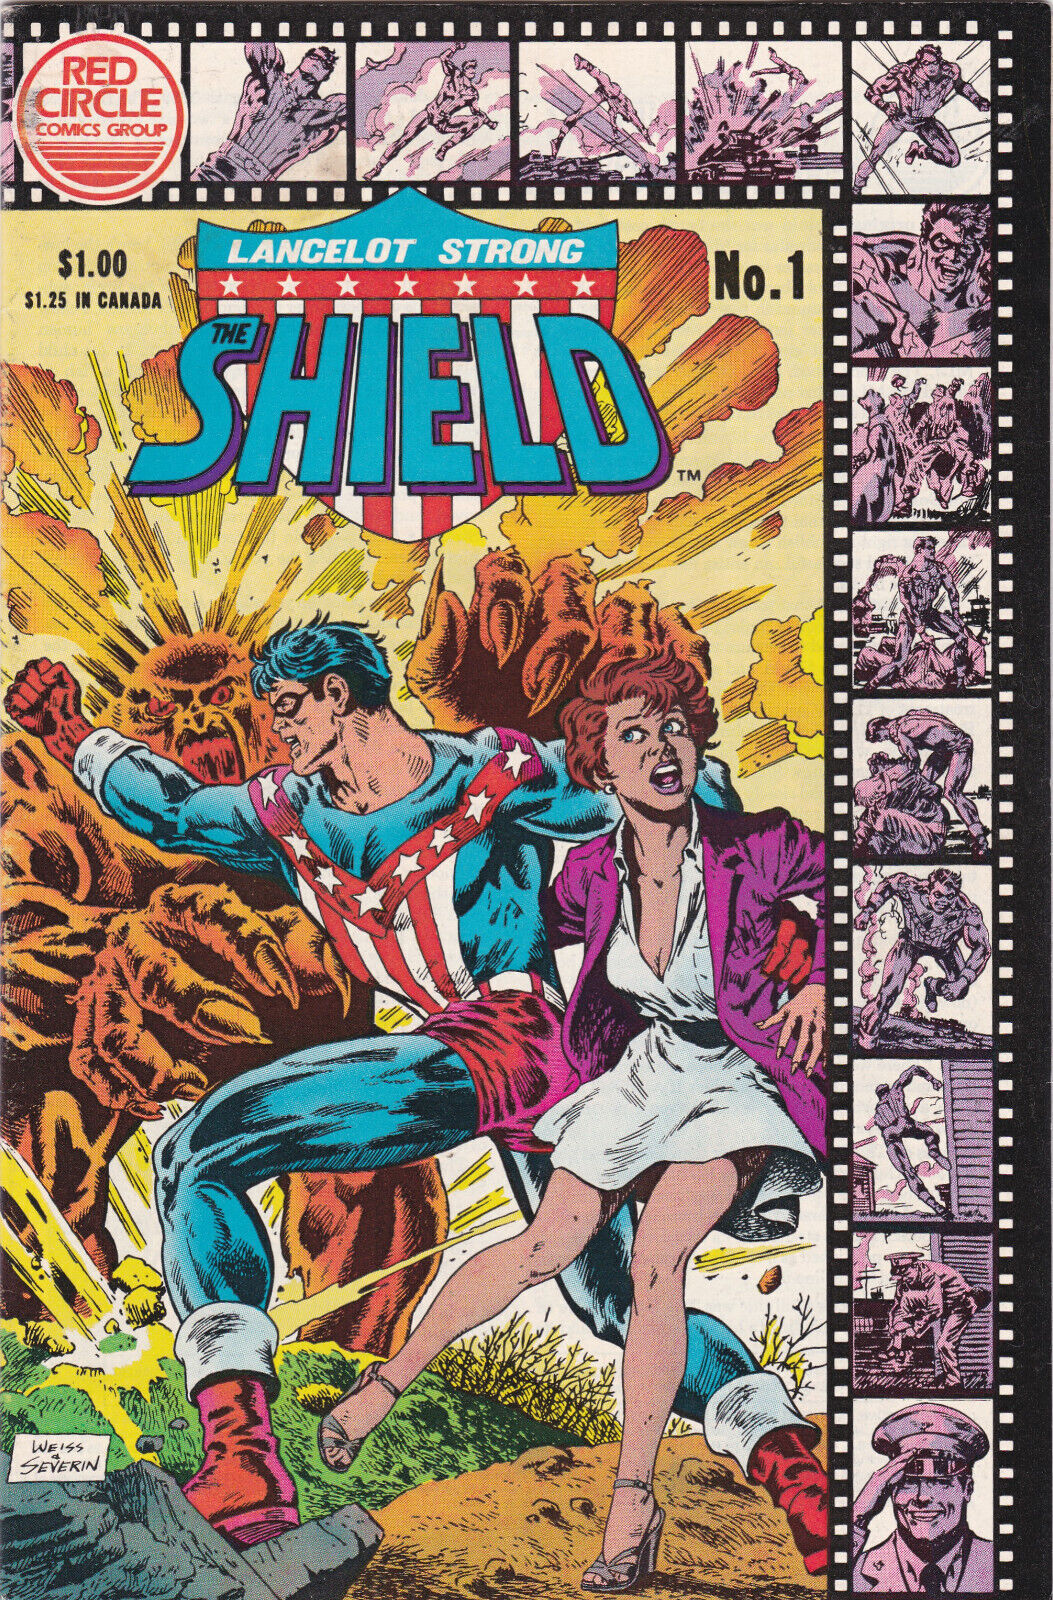 LANCELOT STRONG: THE SHIELD #1 RED CIRCLE COMICS/Archie Comics 1983 High Grade